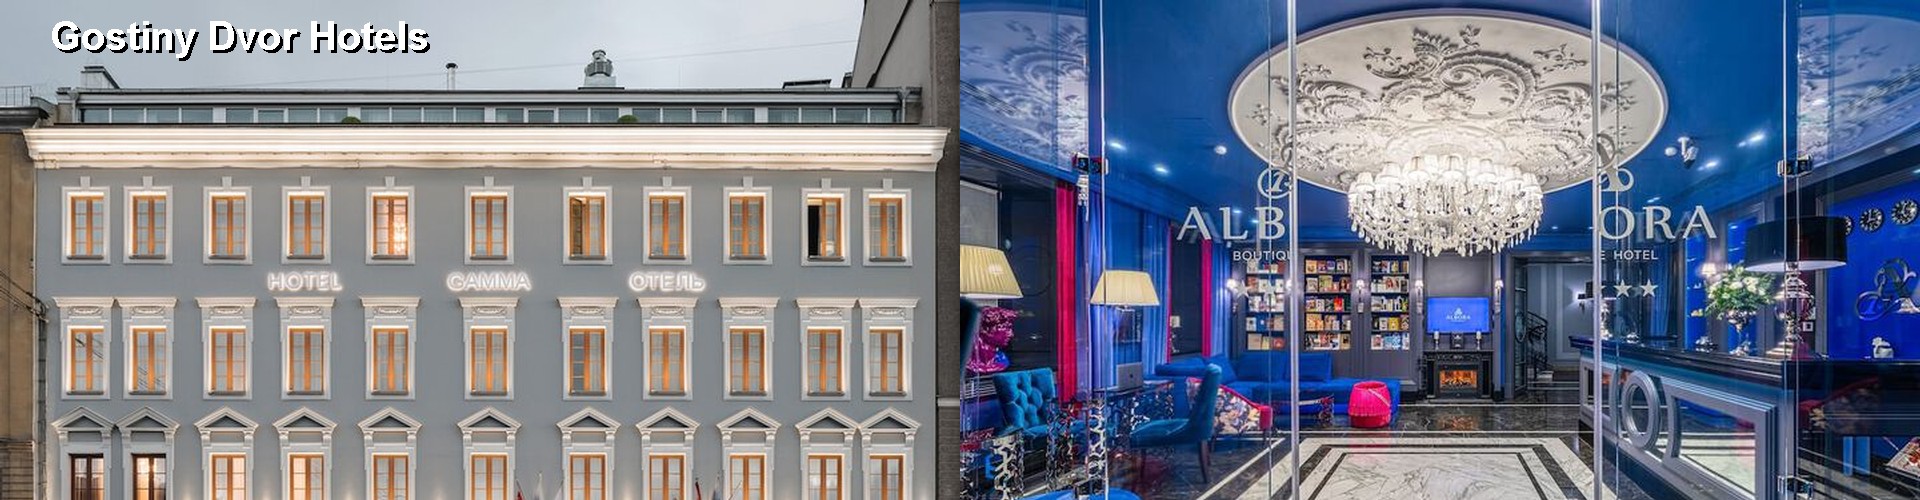 5 Best Hotels near Gostiny Dvor